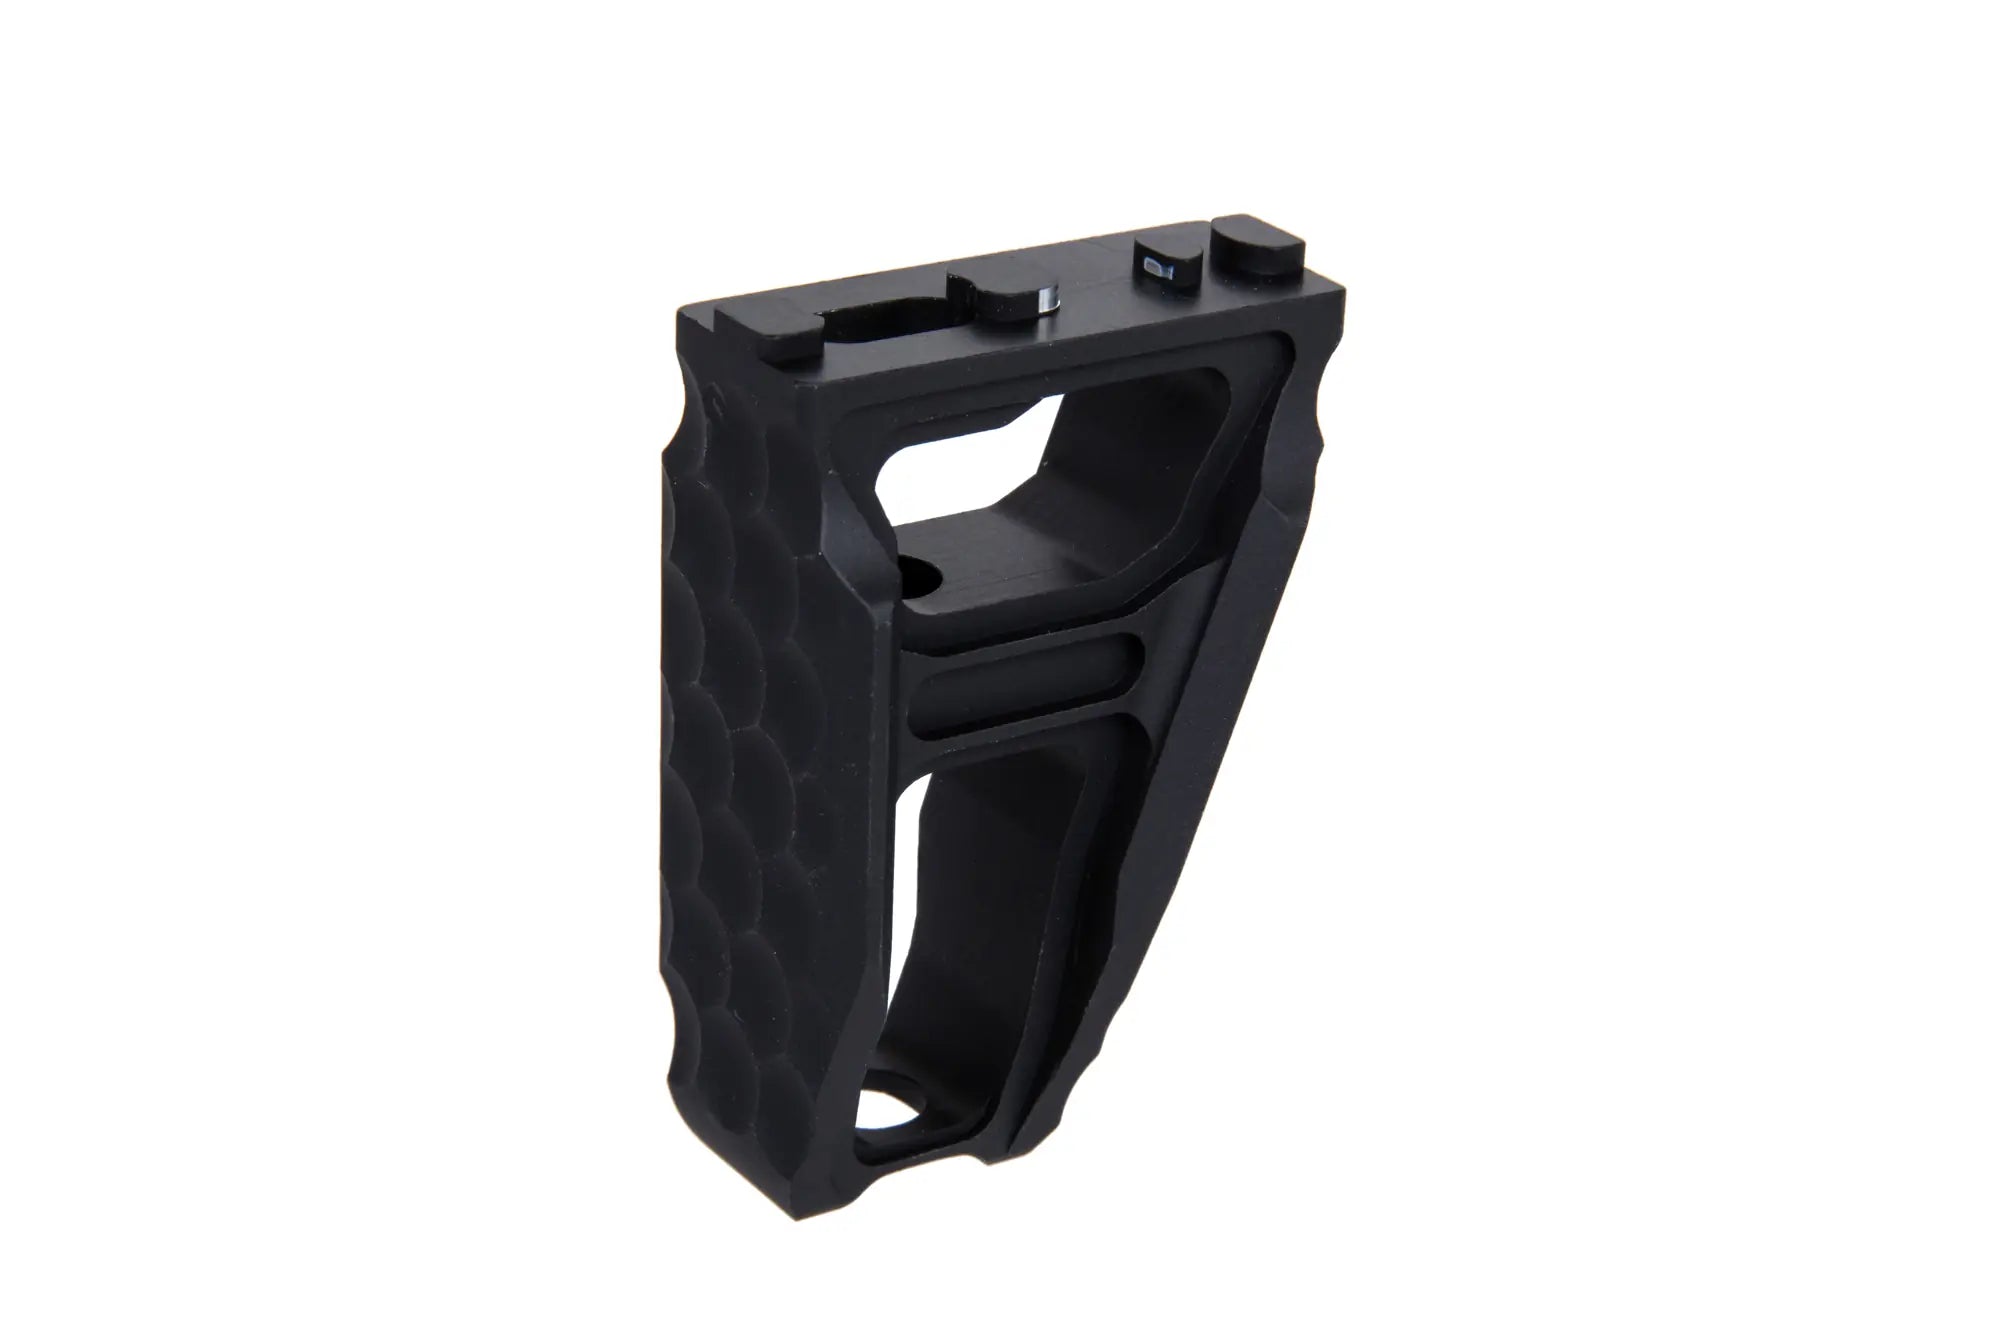 RSAC Lightweight front grip for KeyMod/M-LOK Black